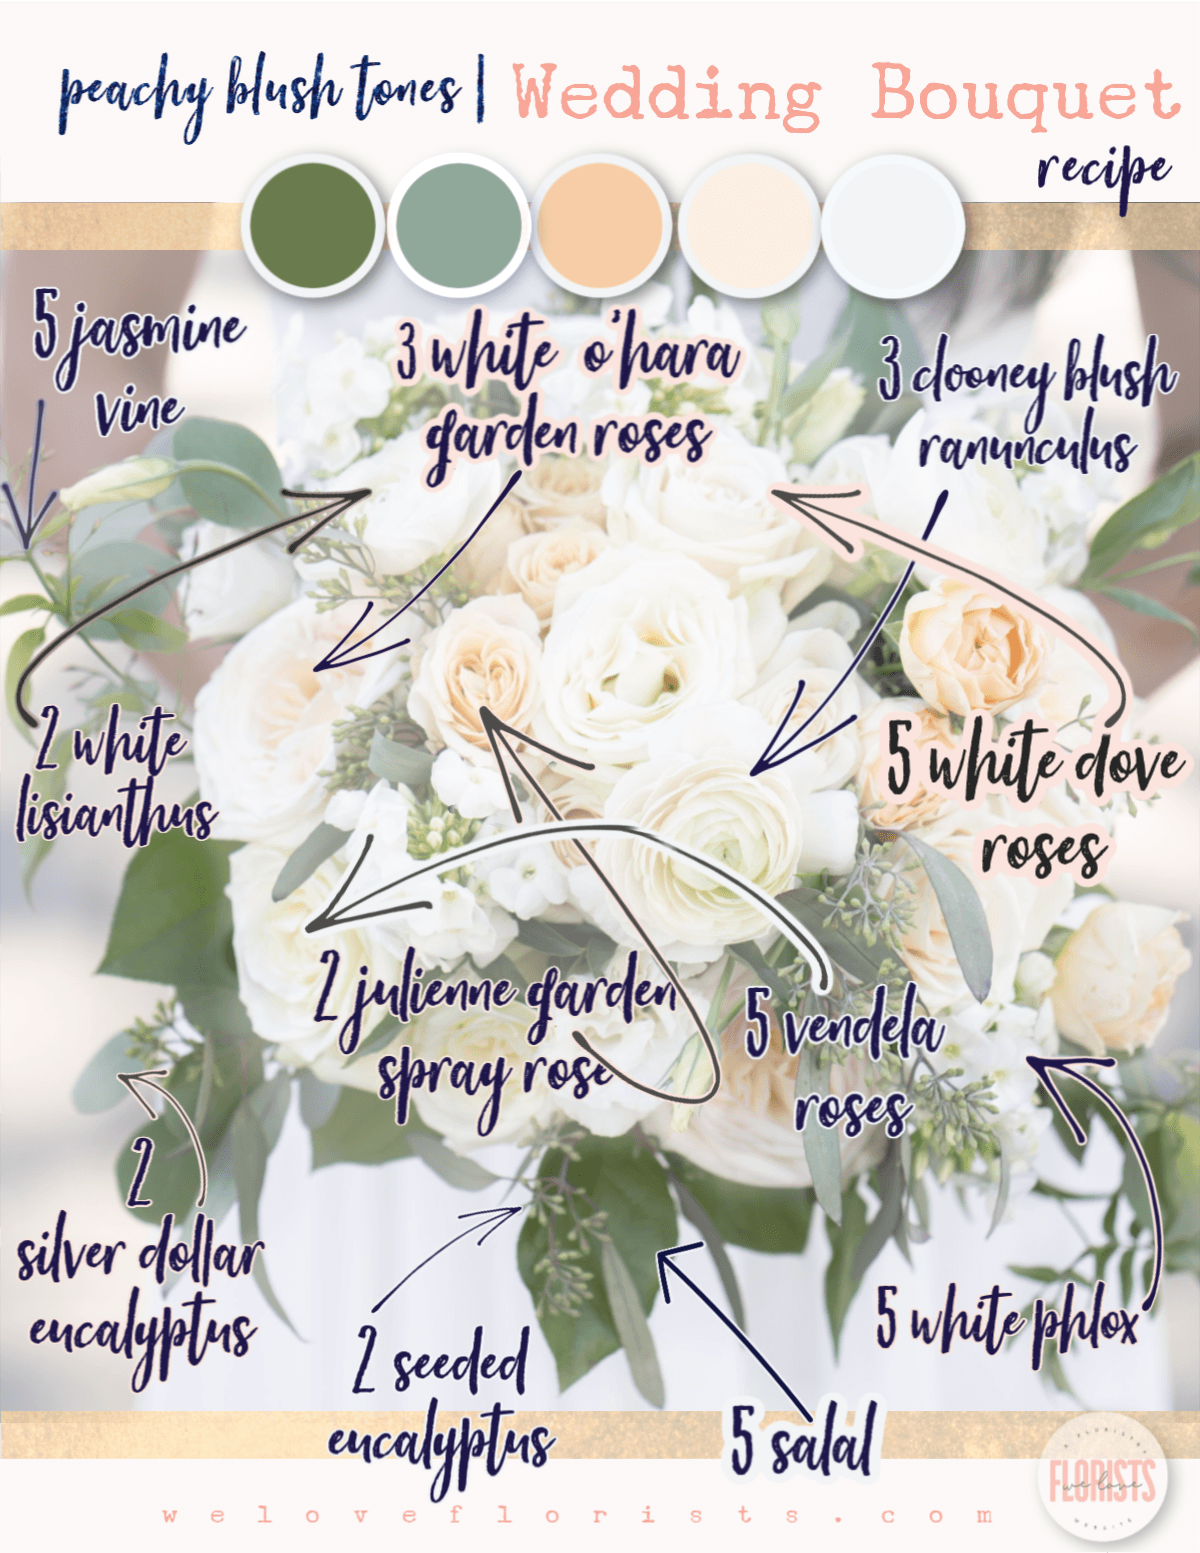 Blush Wedding Bouquet Recipes